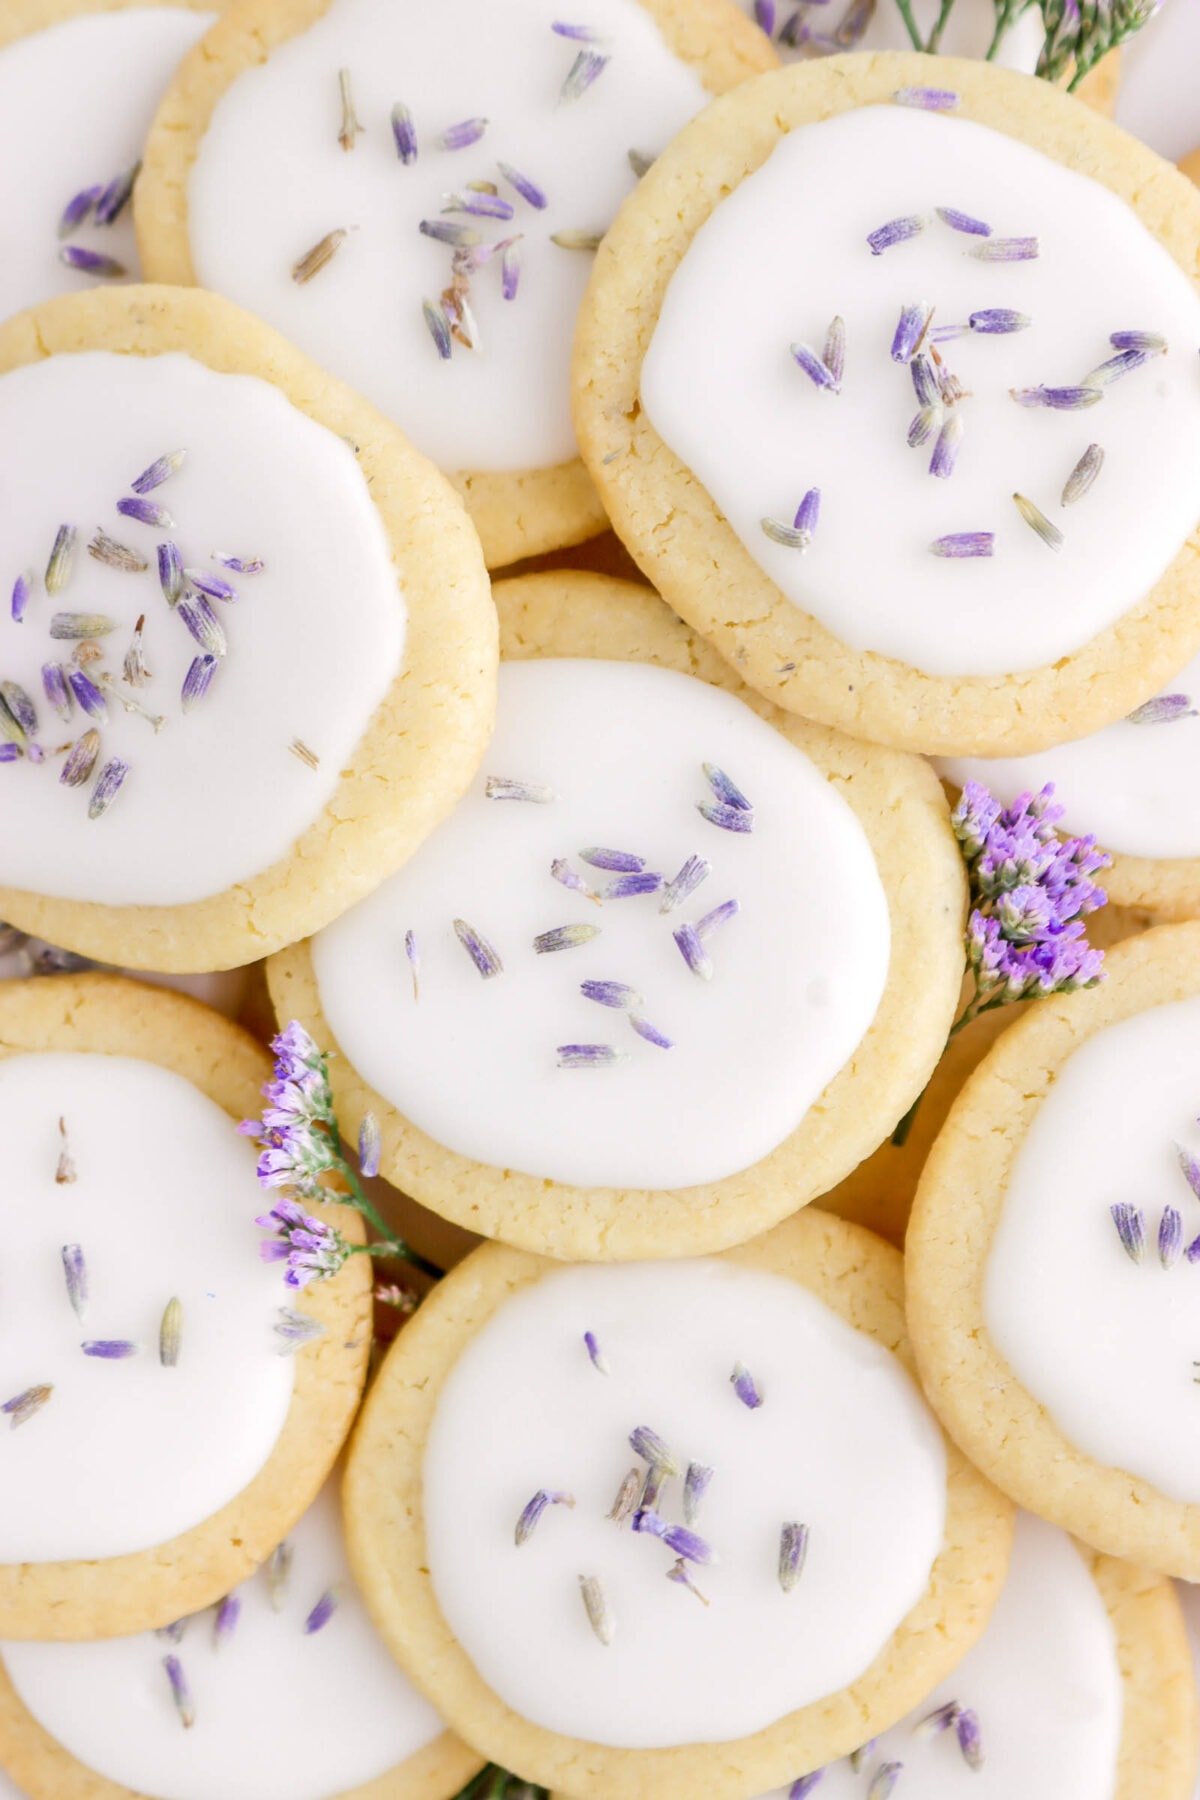 close up of lavender shortbread cookies with purple flowers tucked in-between cookies.